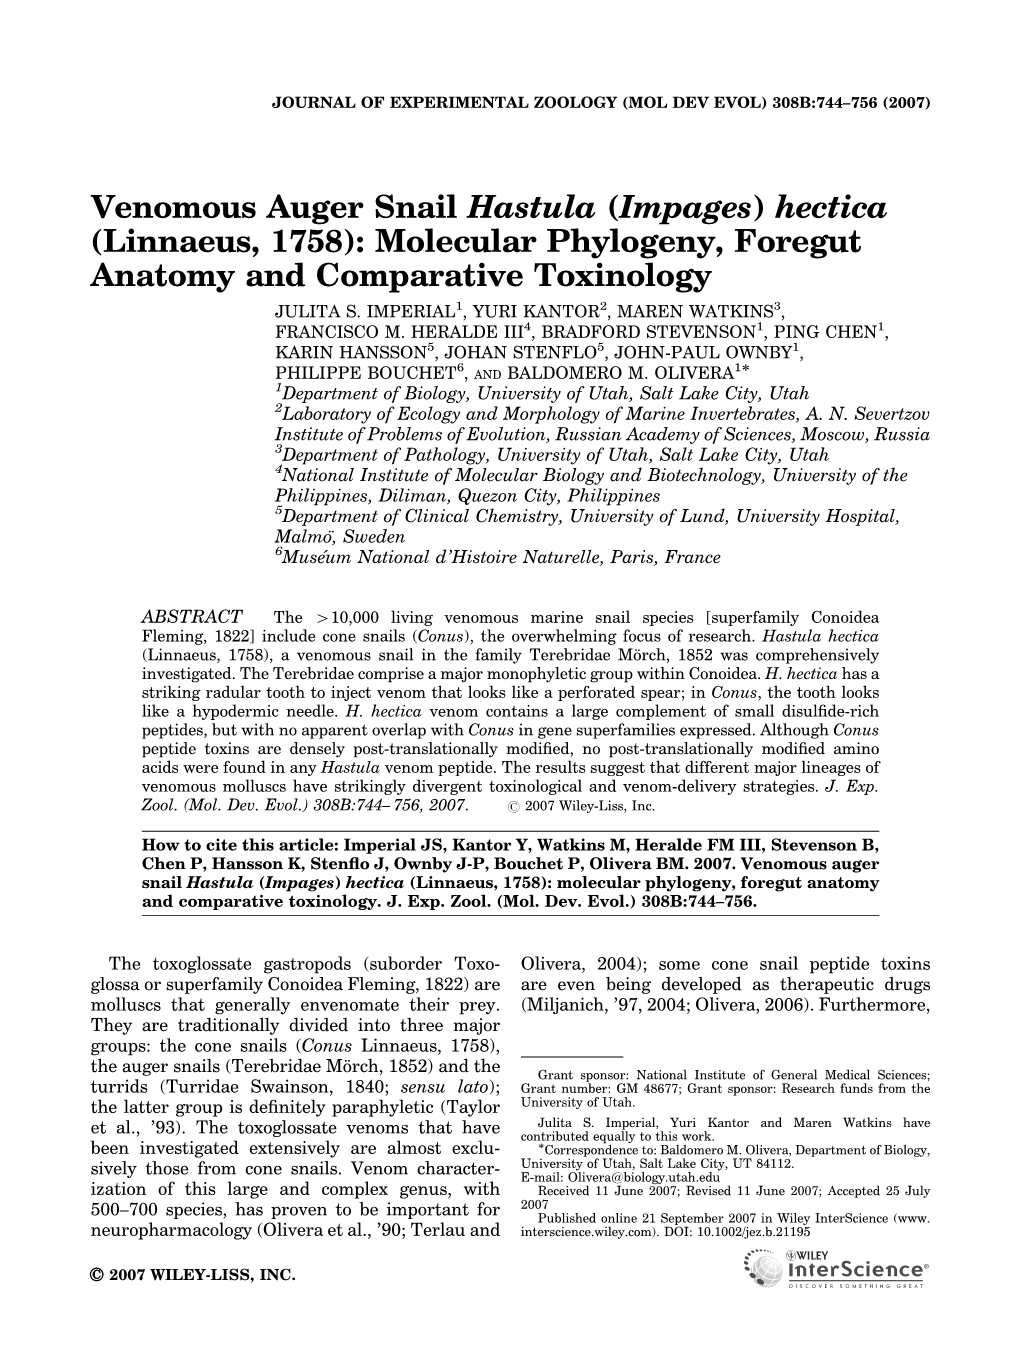 Venomous Auger Snail Hastula (Impages) Hectica (Linnaeus, 1758): Molecular Phylogeny, Foregut Anatomy and Comparative Toxinology JULITA S